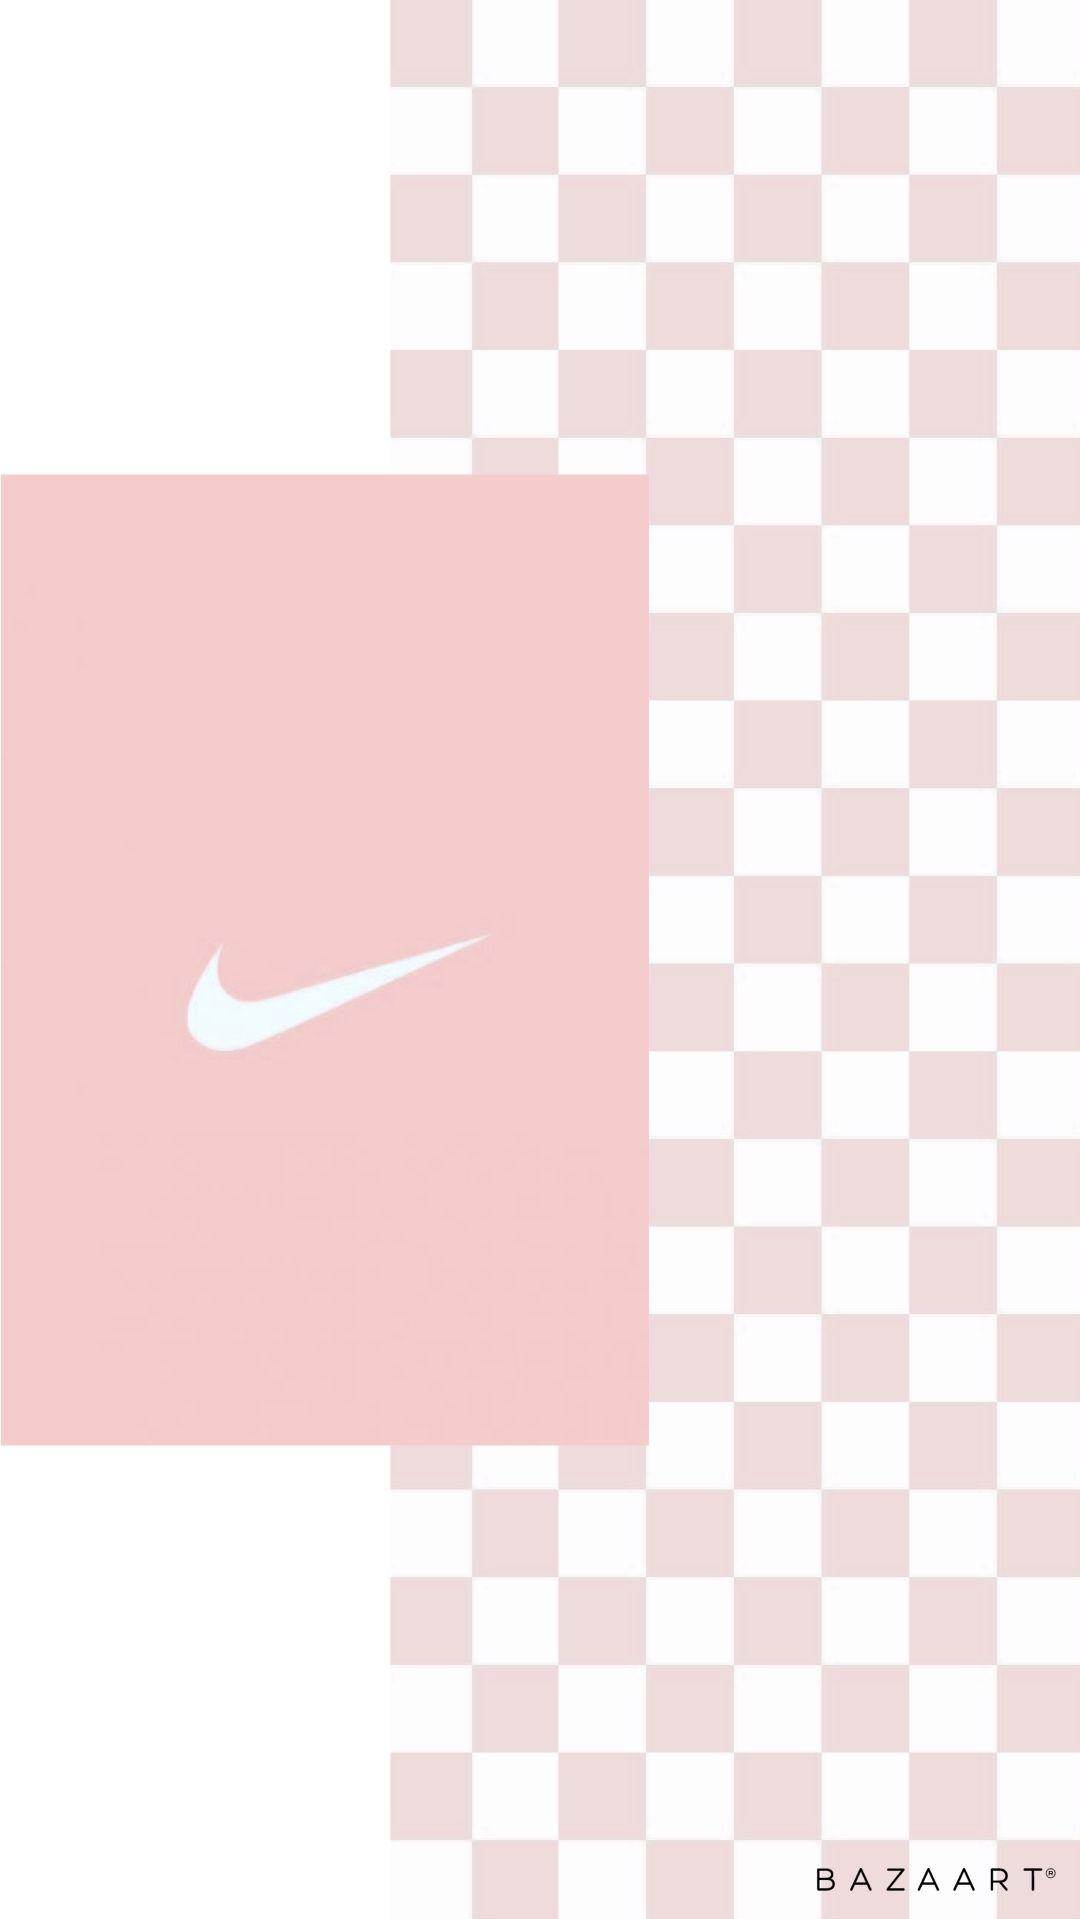 Pink Wallpaper Nike Simple iPhone